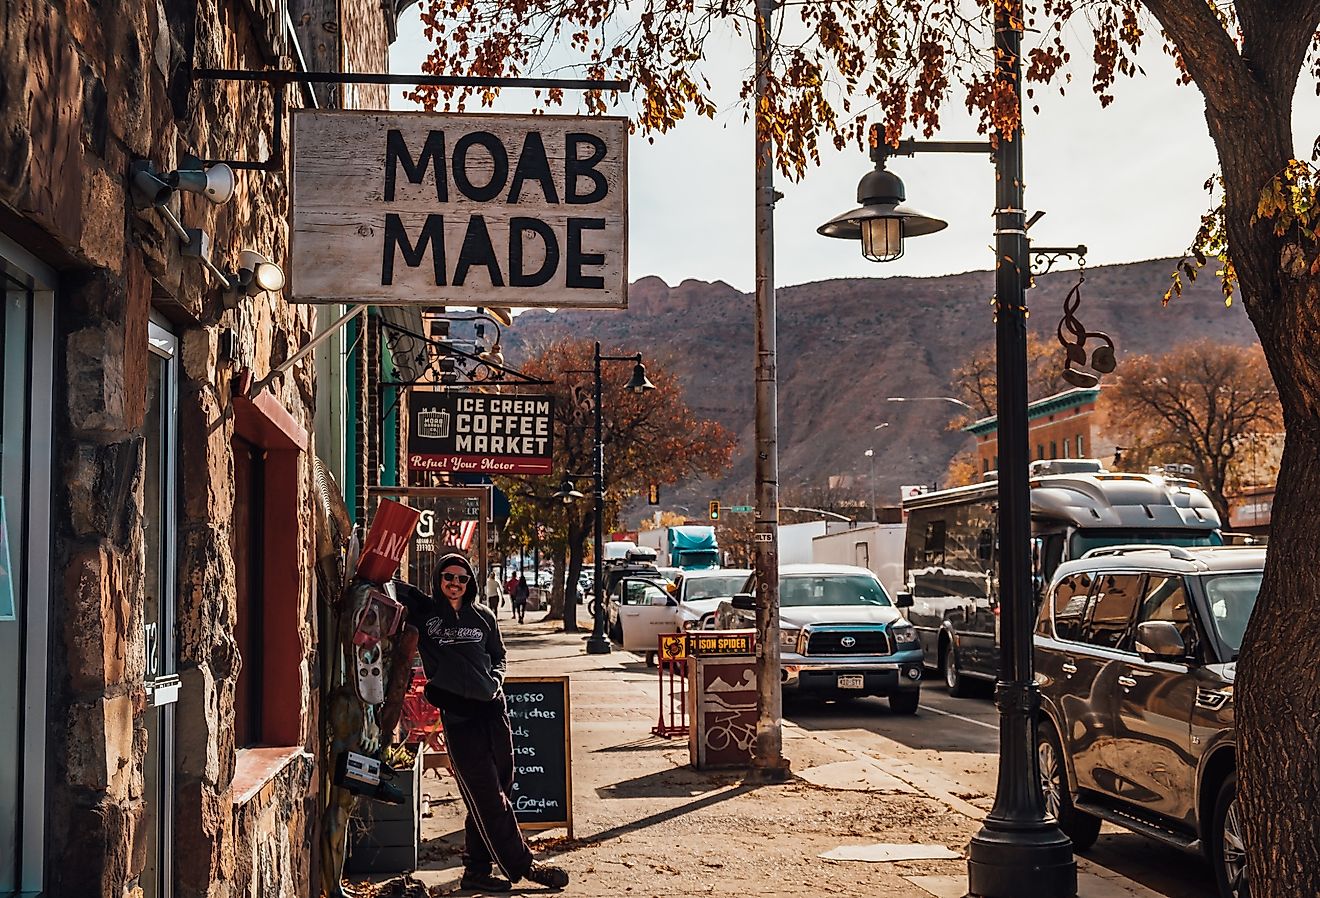 Downtown Moab, Utah. Image credit Ilhamchewadventures via Shutterstock